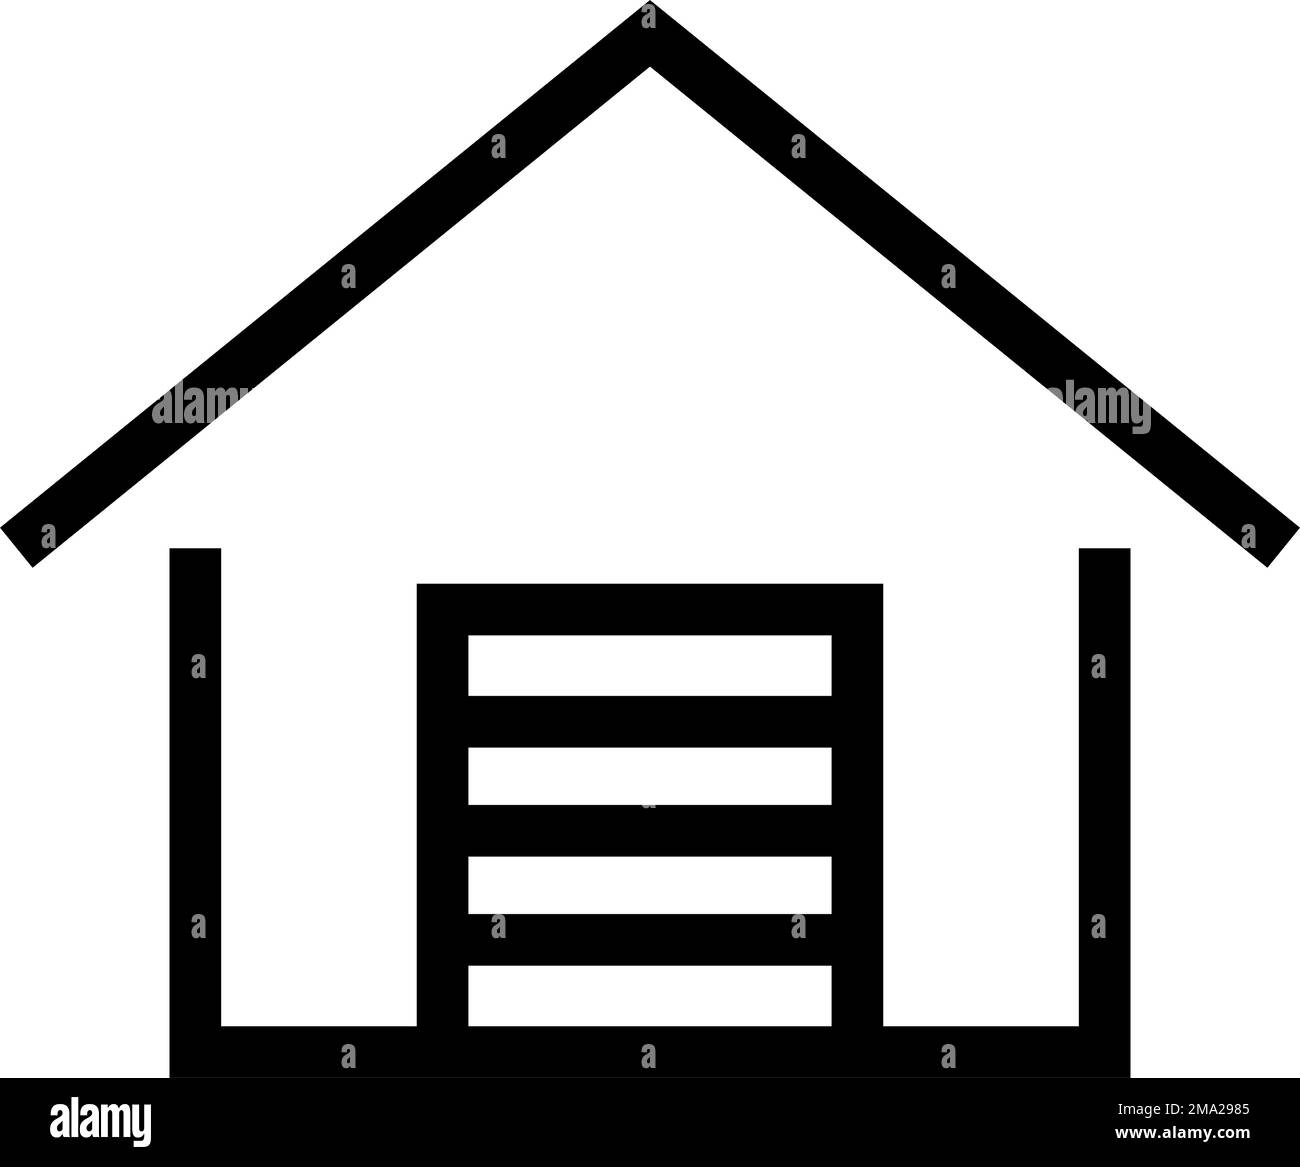 Simple logistics warehouse icon. Trunk room icon. Storage unit. Editable vector. Stock Vector